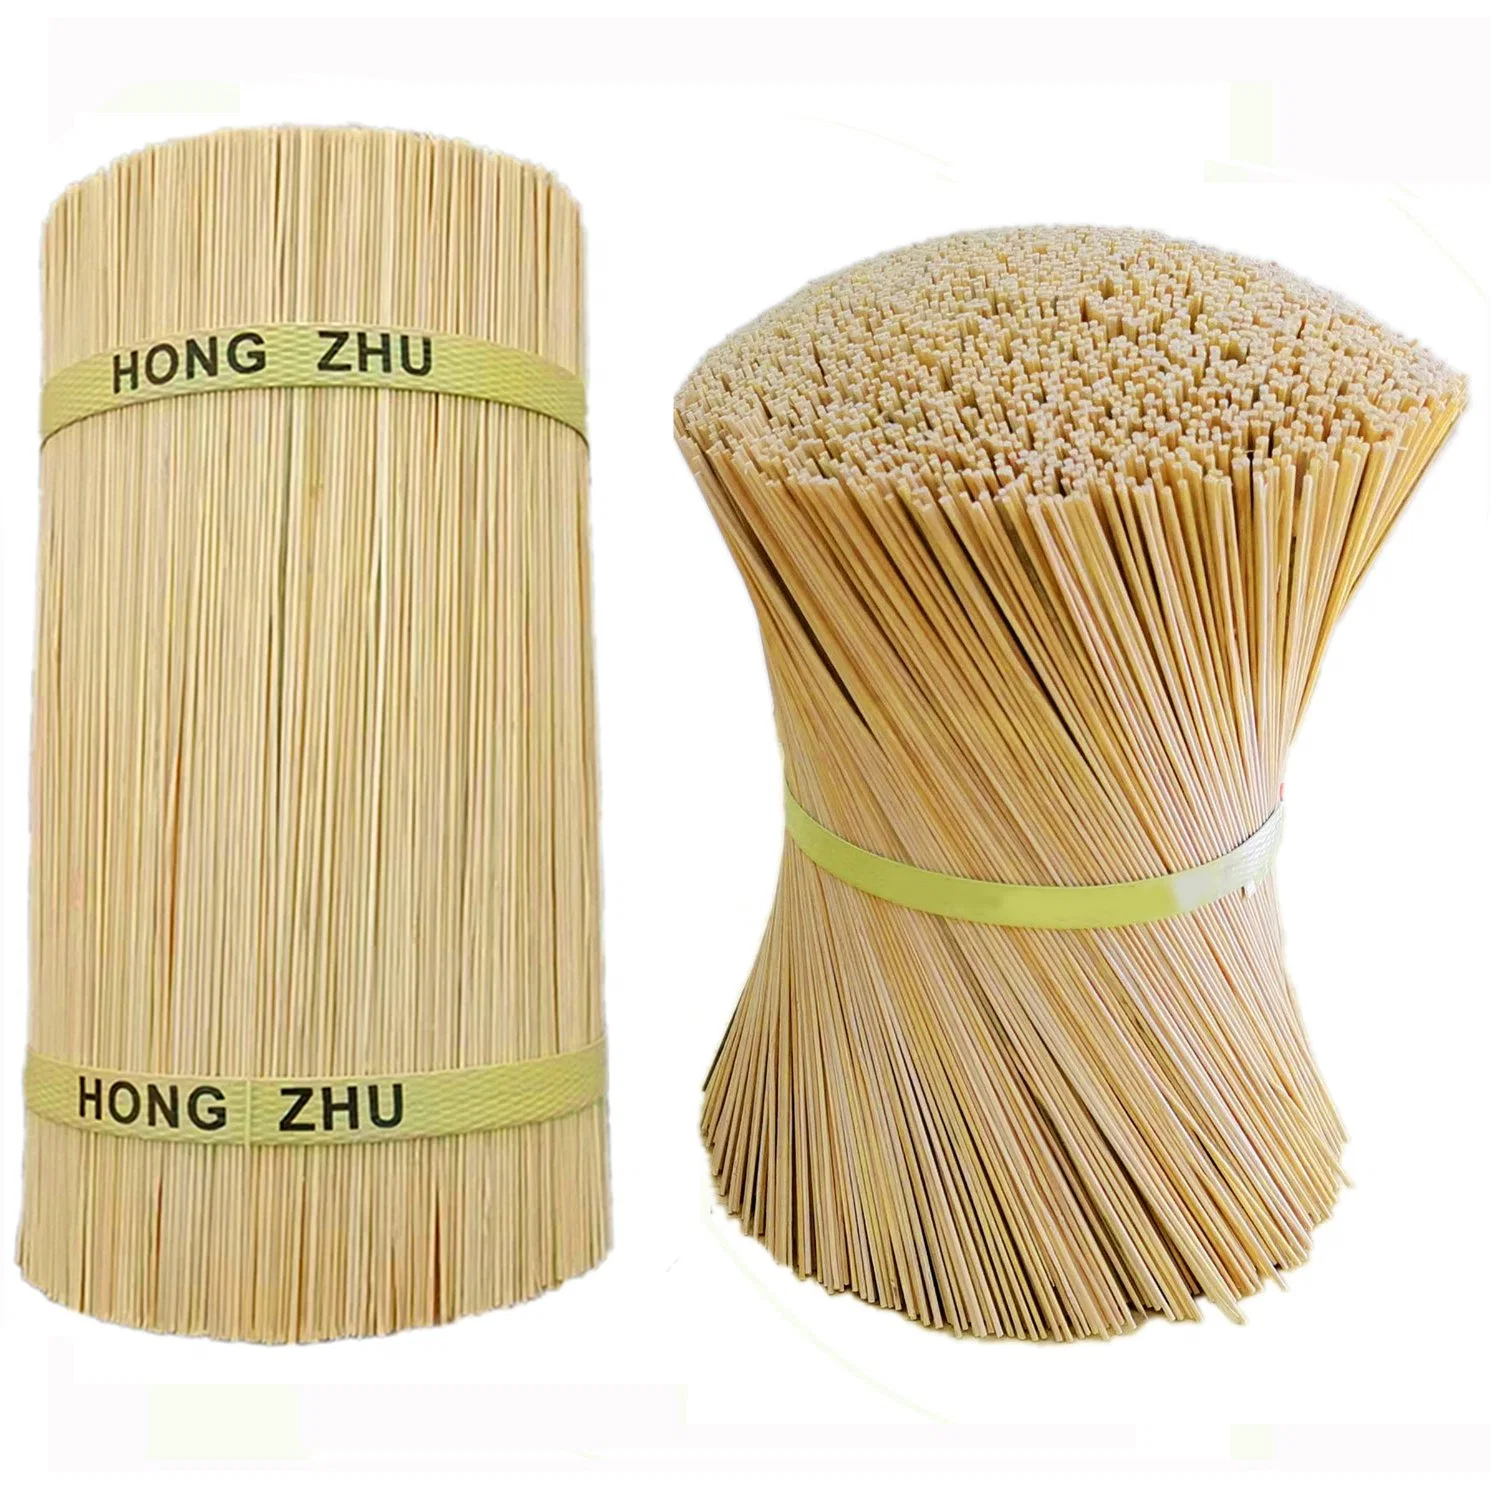 Fábrica de bambu Xunwu Lianfeng 7, 8, 9, 10, 12 polegadas Agarbatti Bamboo varas para incenso